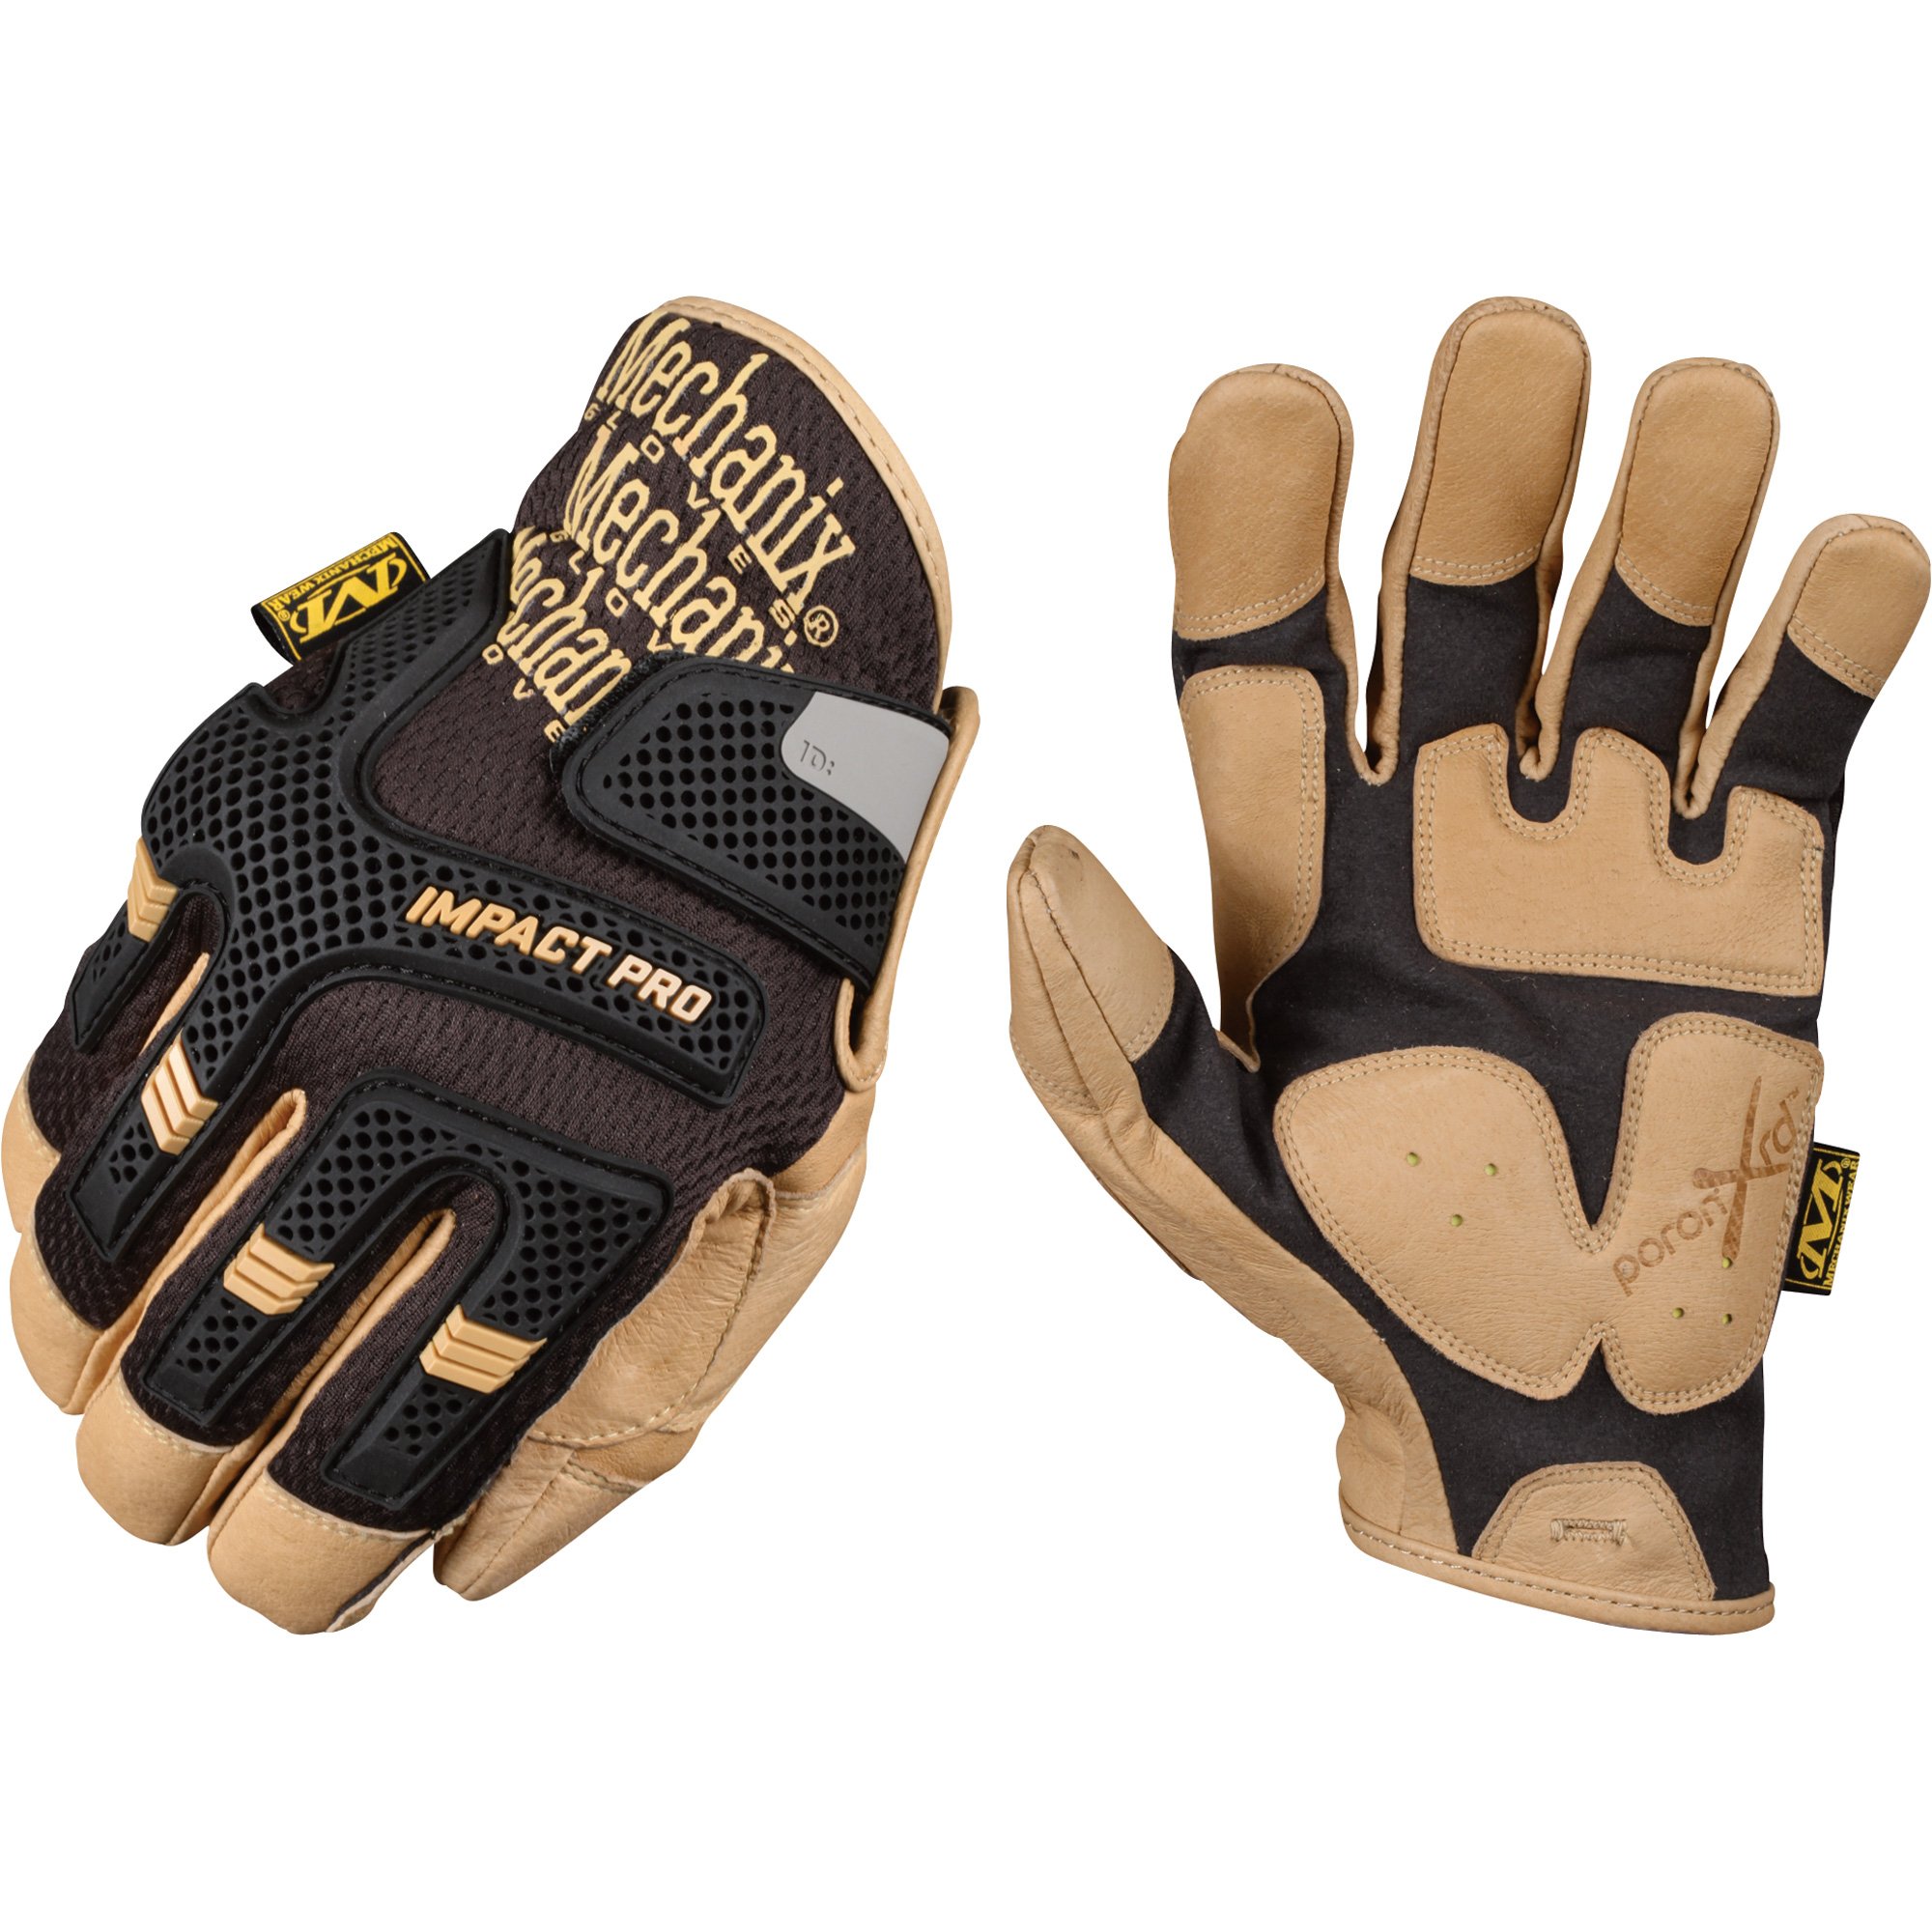 Mechanix Wear® Impact Pro Leather Hook and Loop Cuff Glove, Black